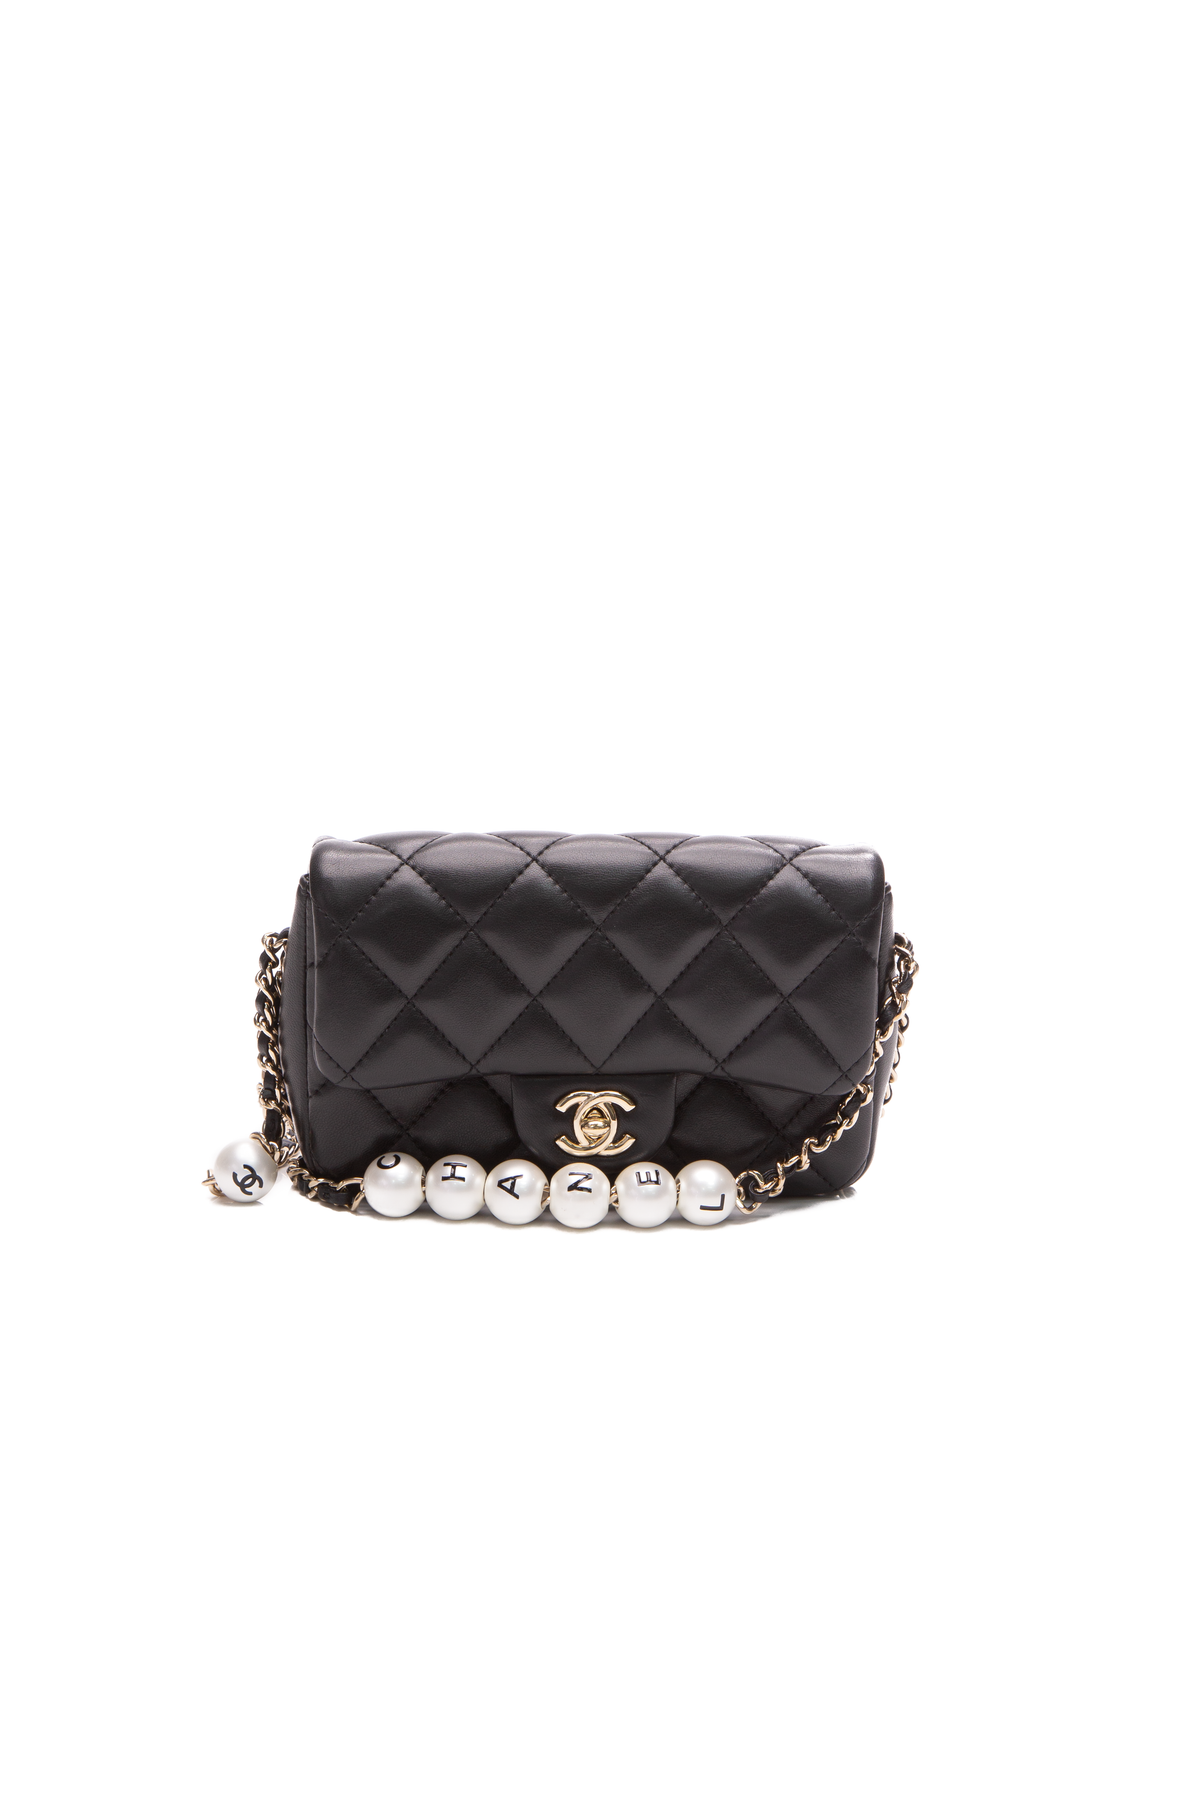 Chanel My Precious Pearl Mini Flap Bag - Couture USA